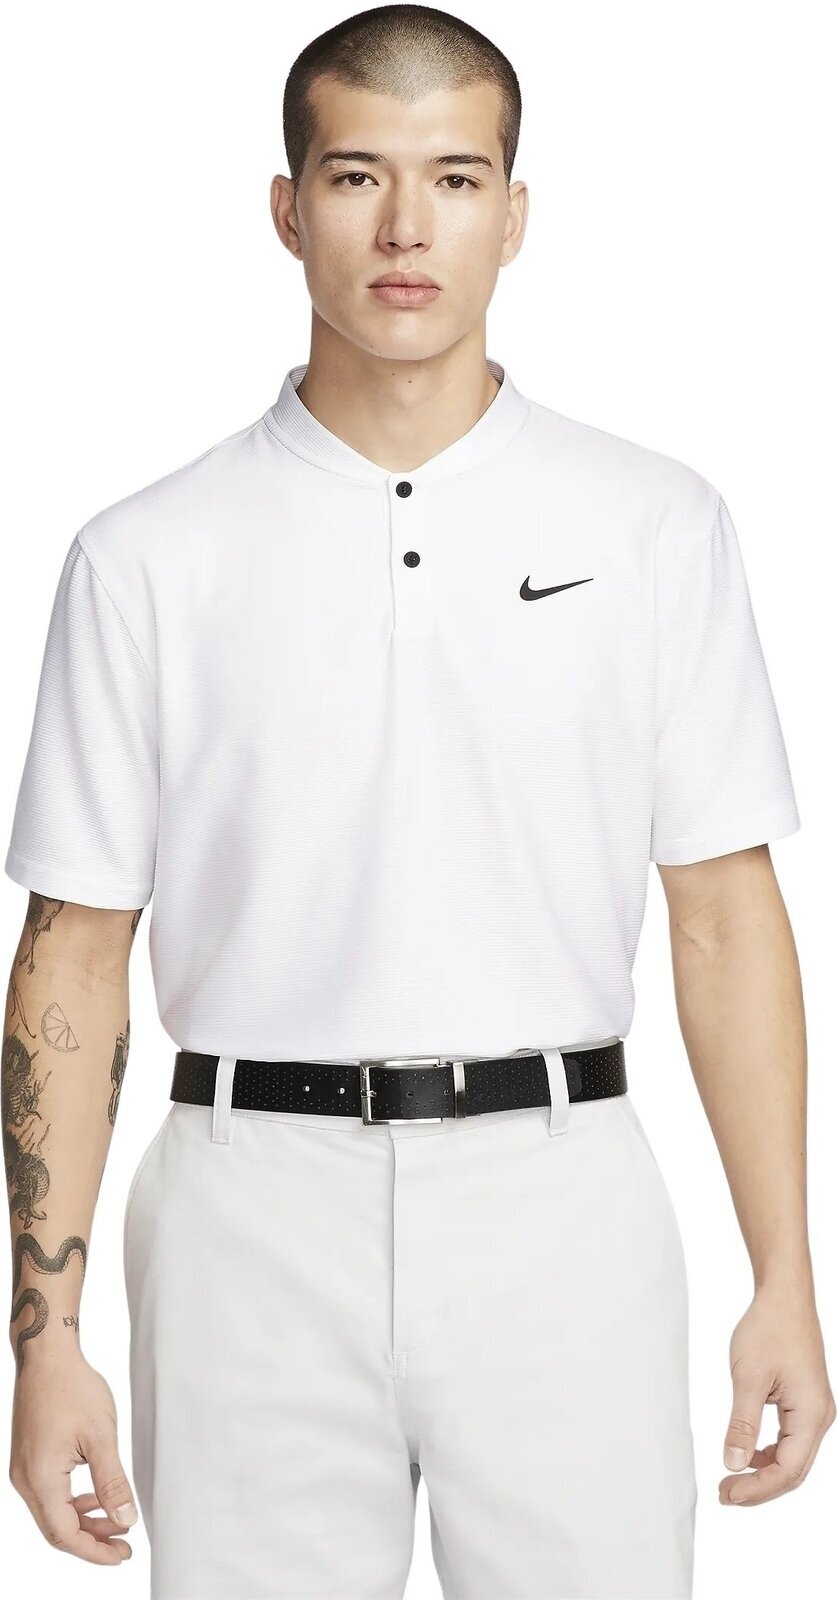 Polo Shirt Nike Dri-Fit Victory Texture Mens Polo White/Black S Polo Shirt